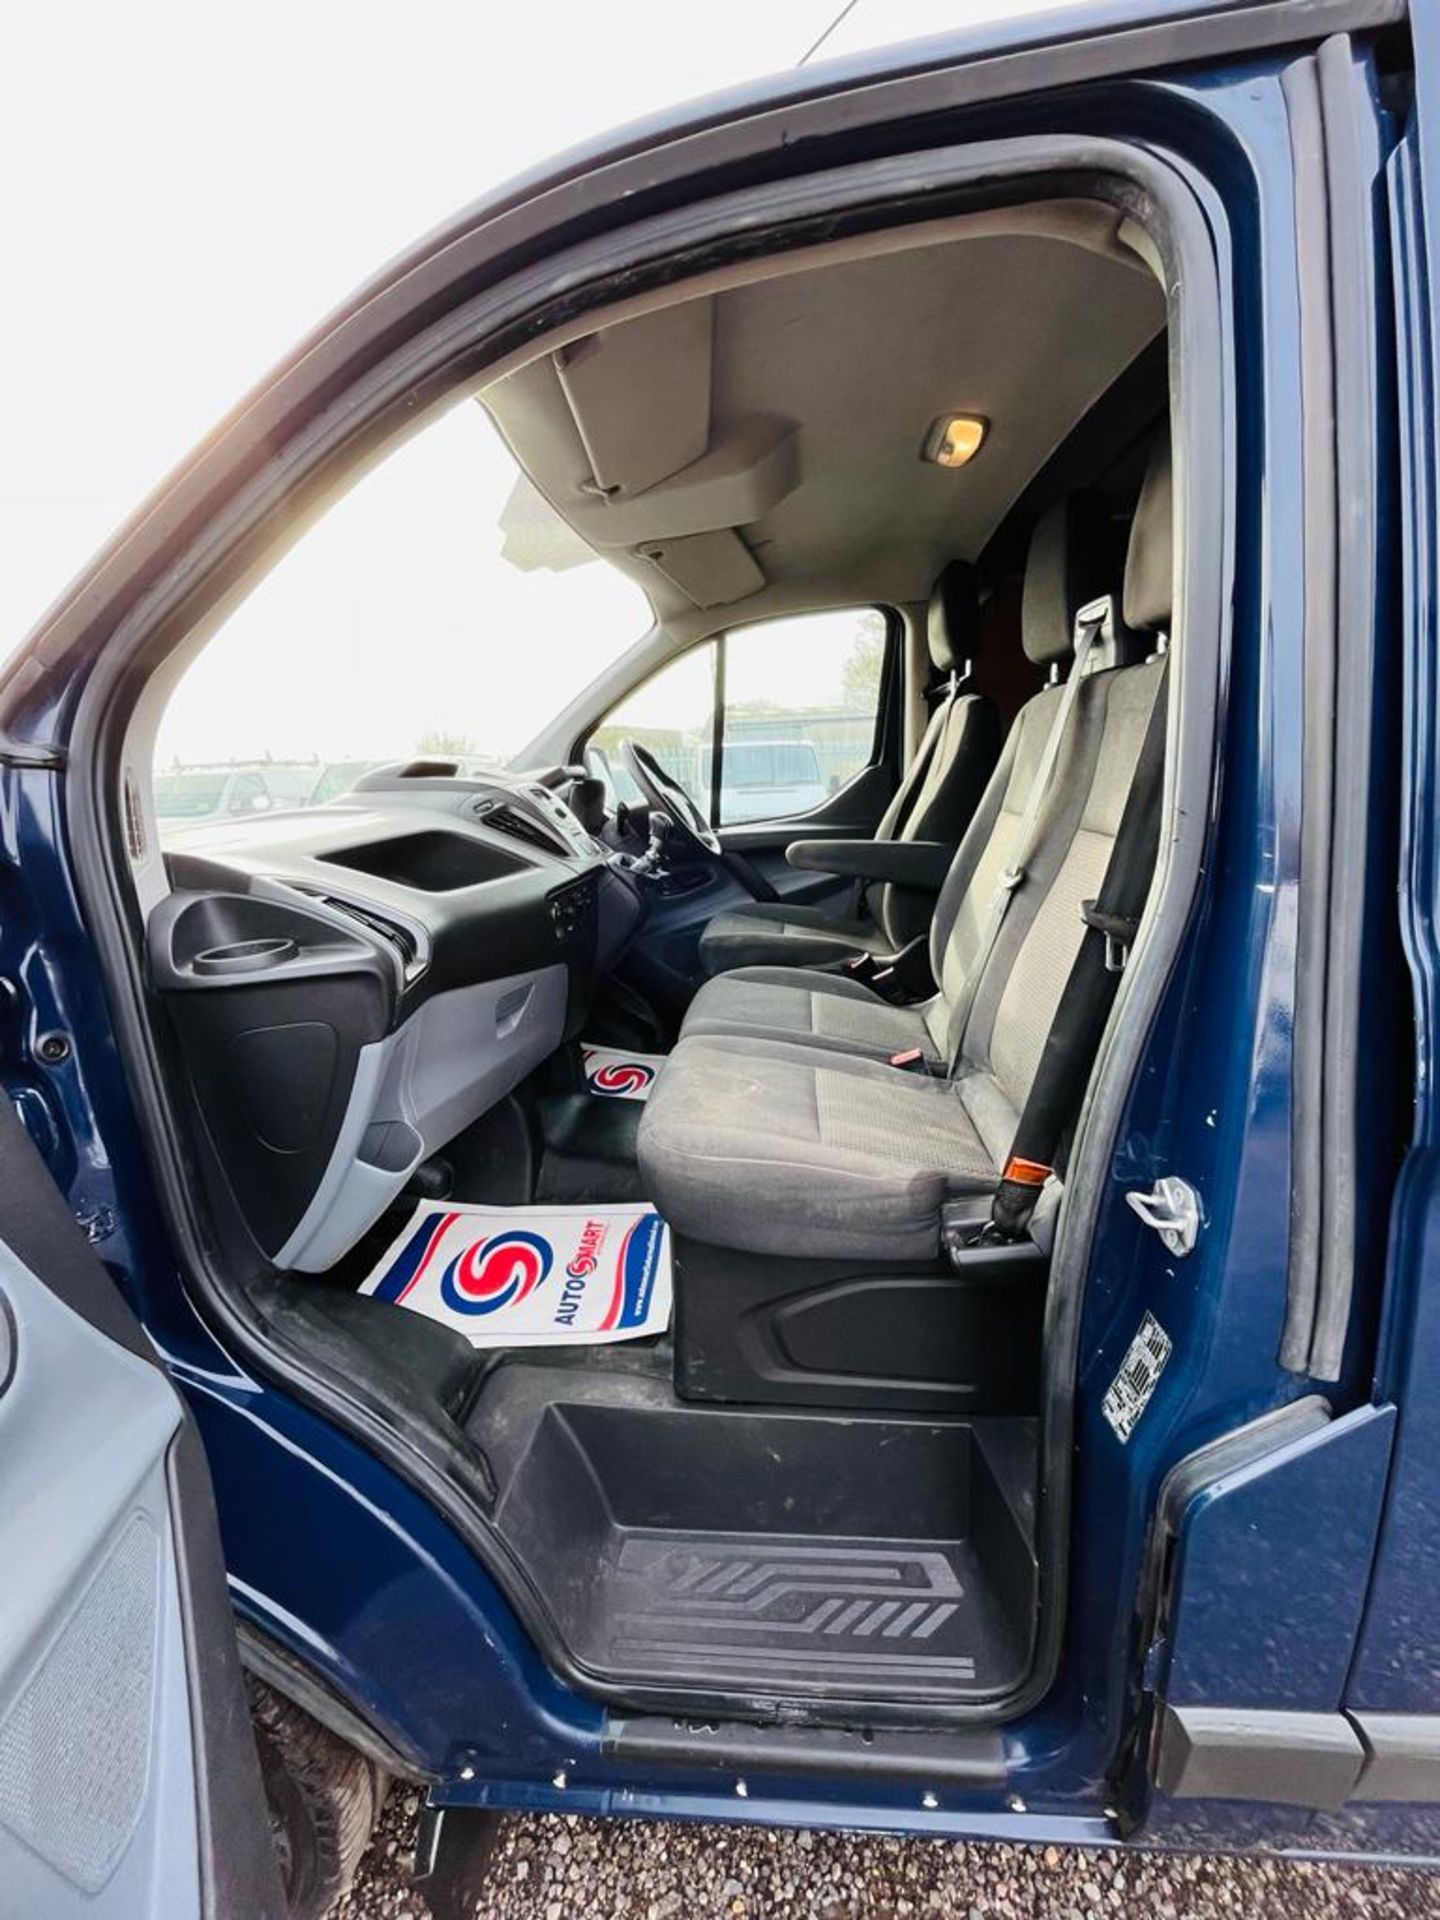 ** ON SALE ** Ford transit Custom 2.2 TDCI Eco Tech 100 270 2015 '65 Reg' - Panel Van - Image 18 of 22